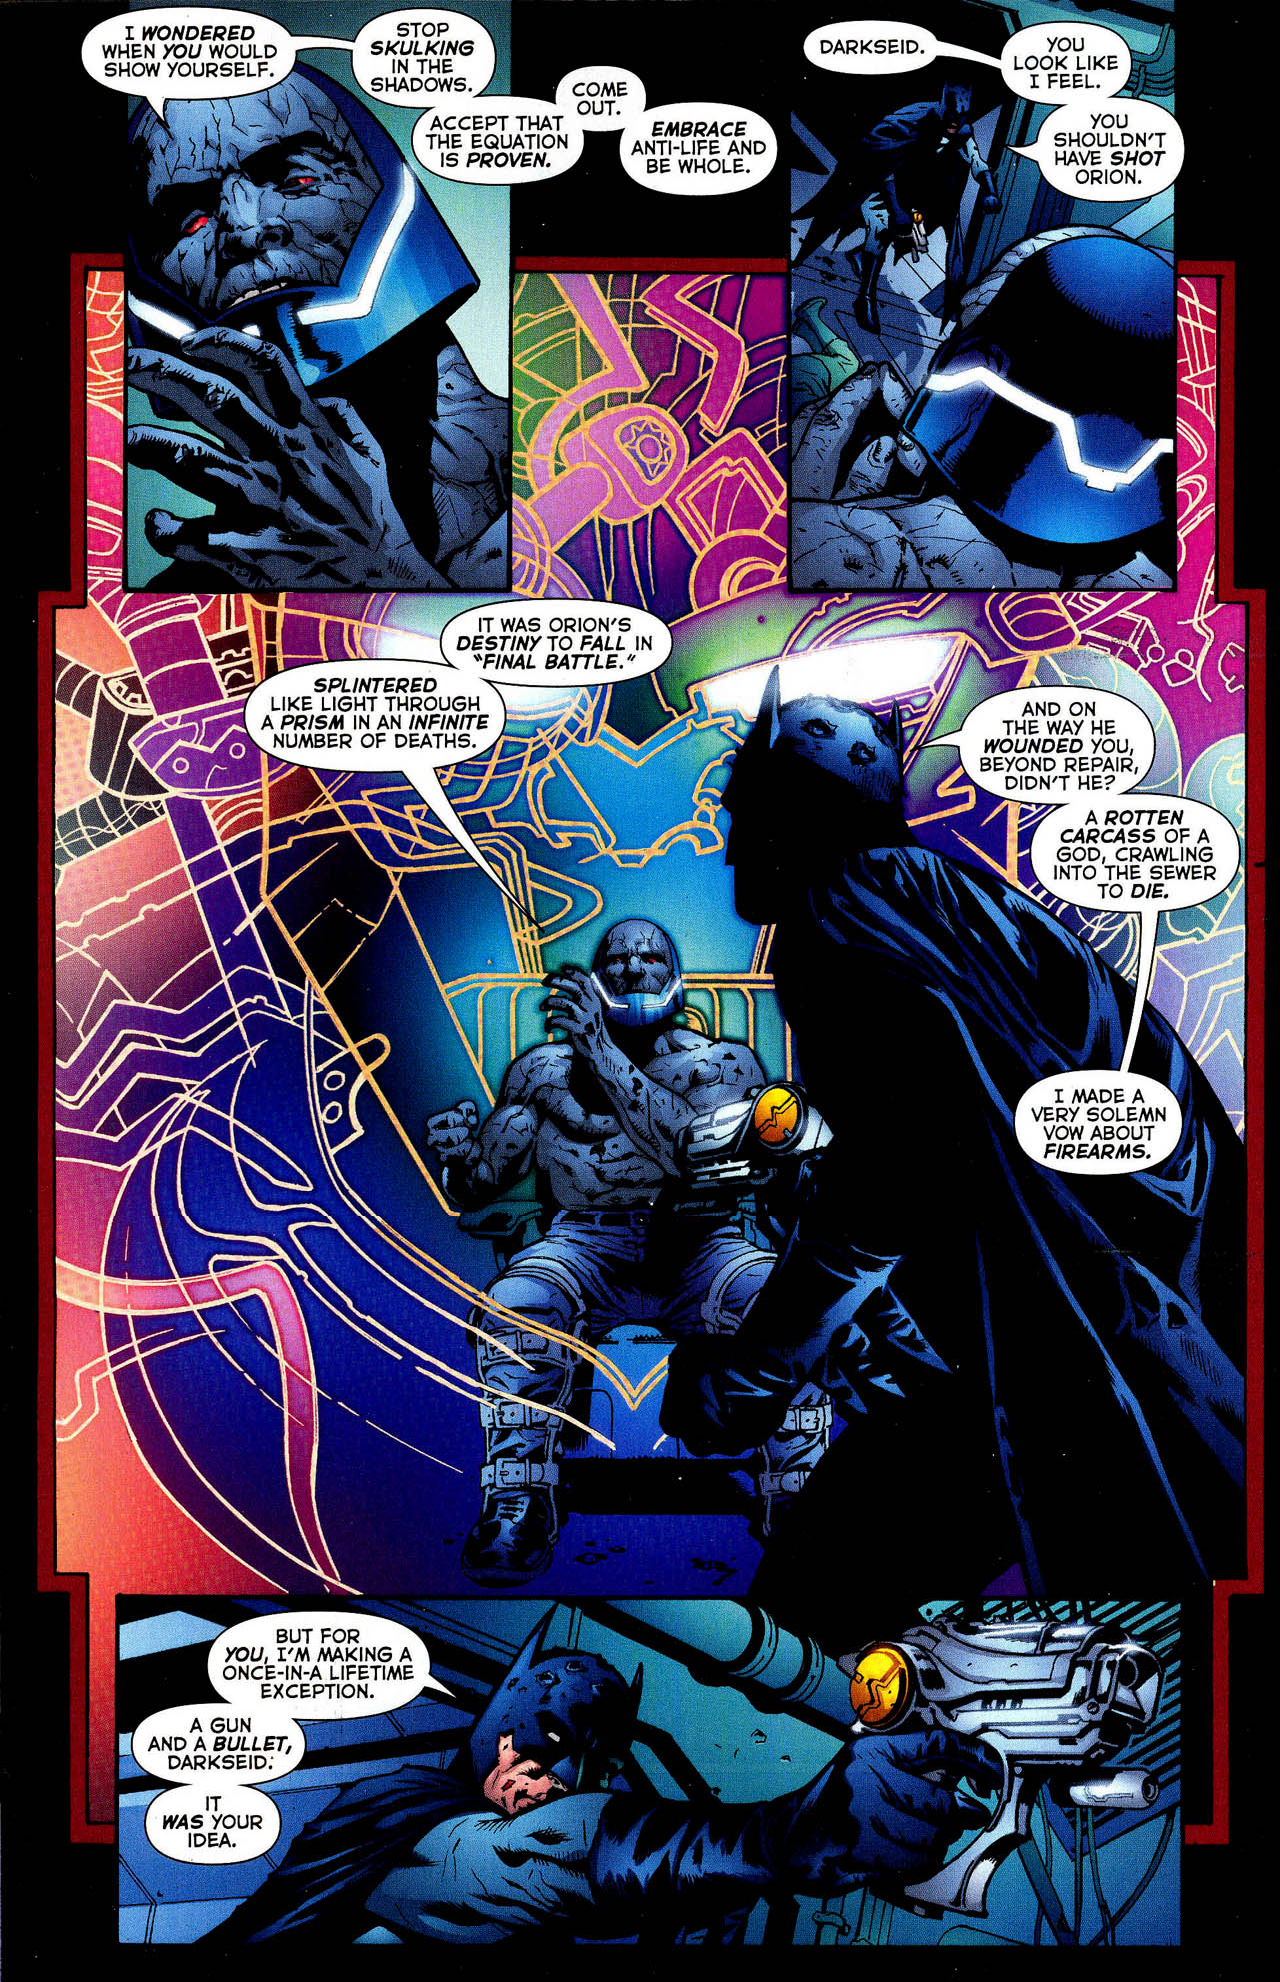 batman shoots darkseid